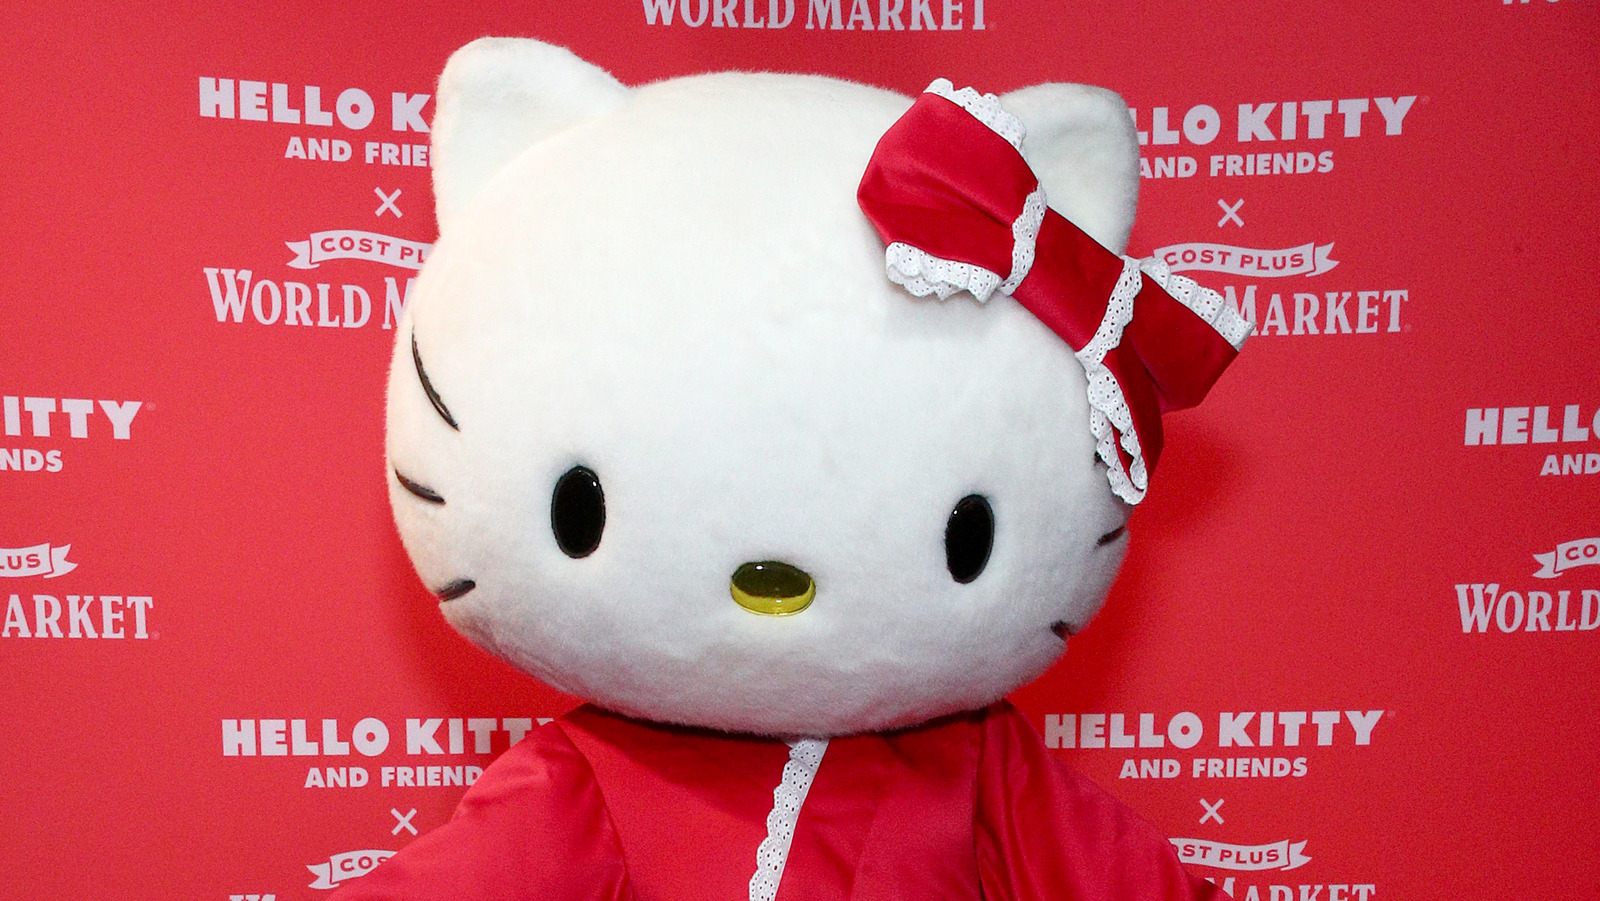 Hello Kitty makes Vegas debut: Travel Weekly